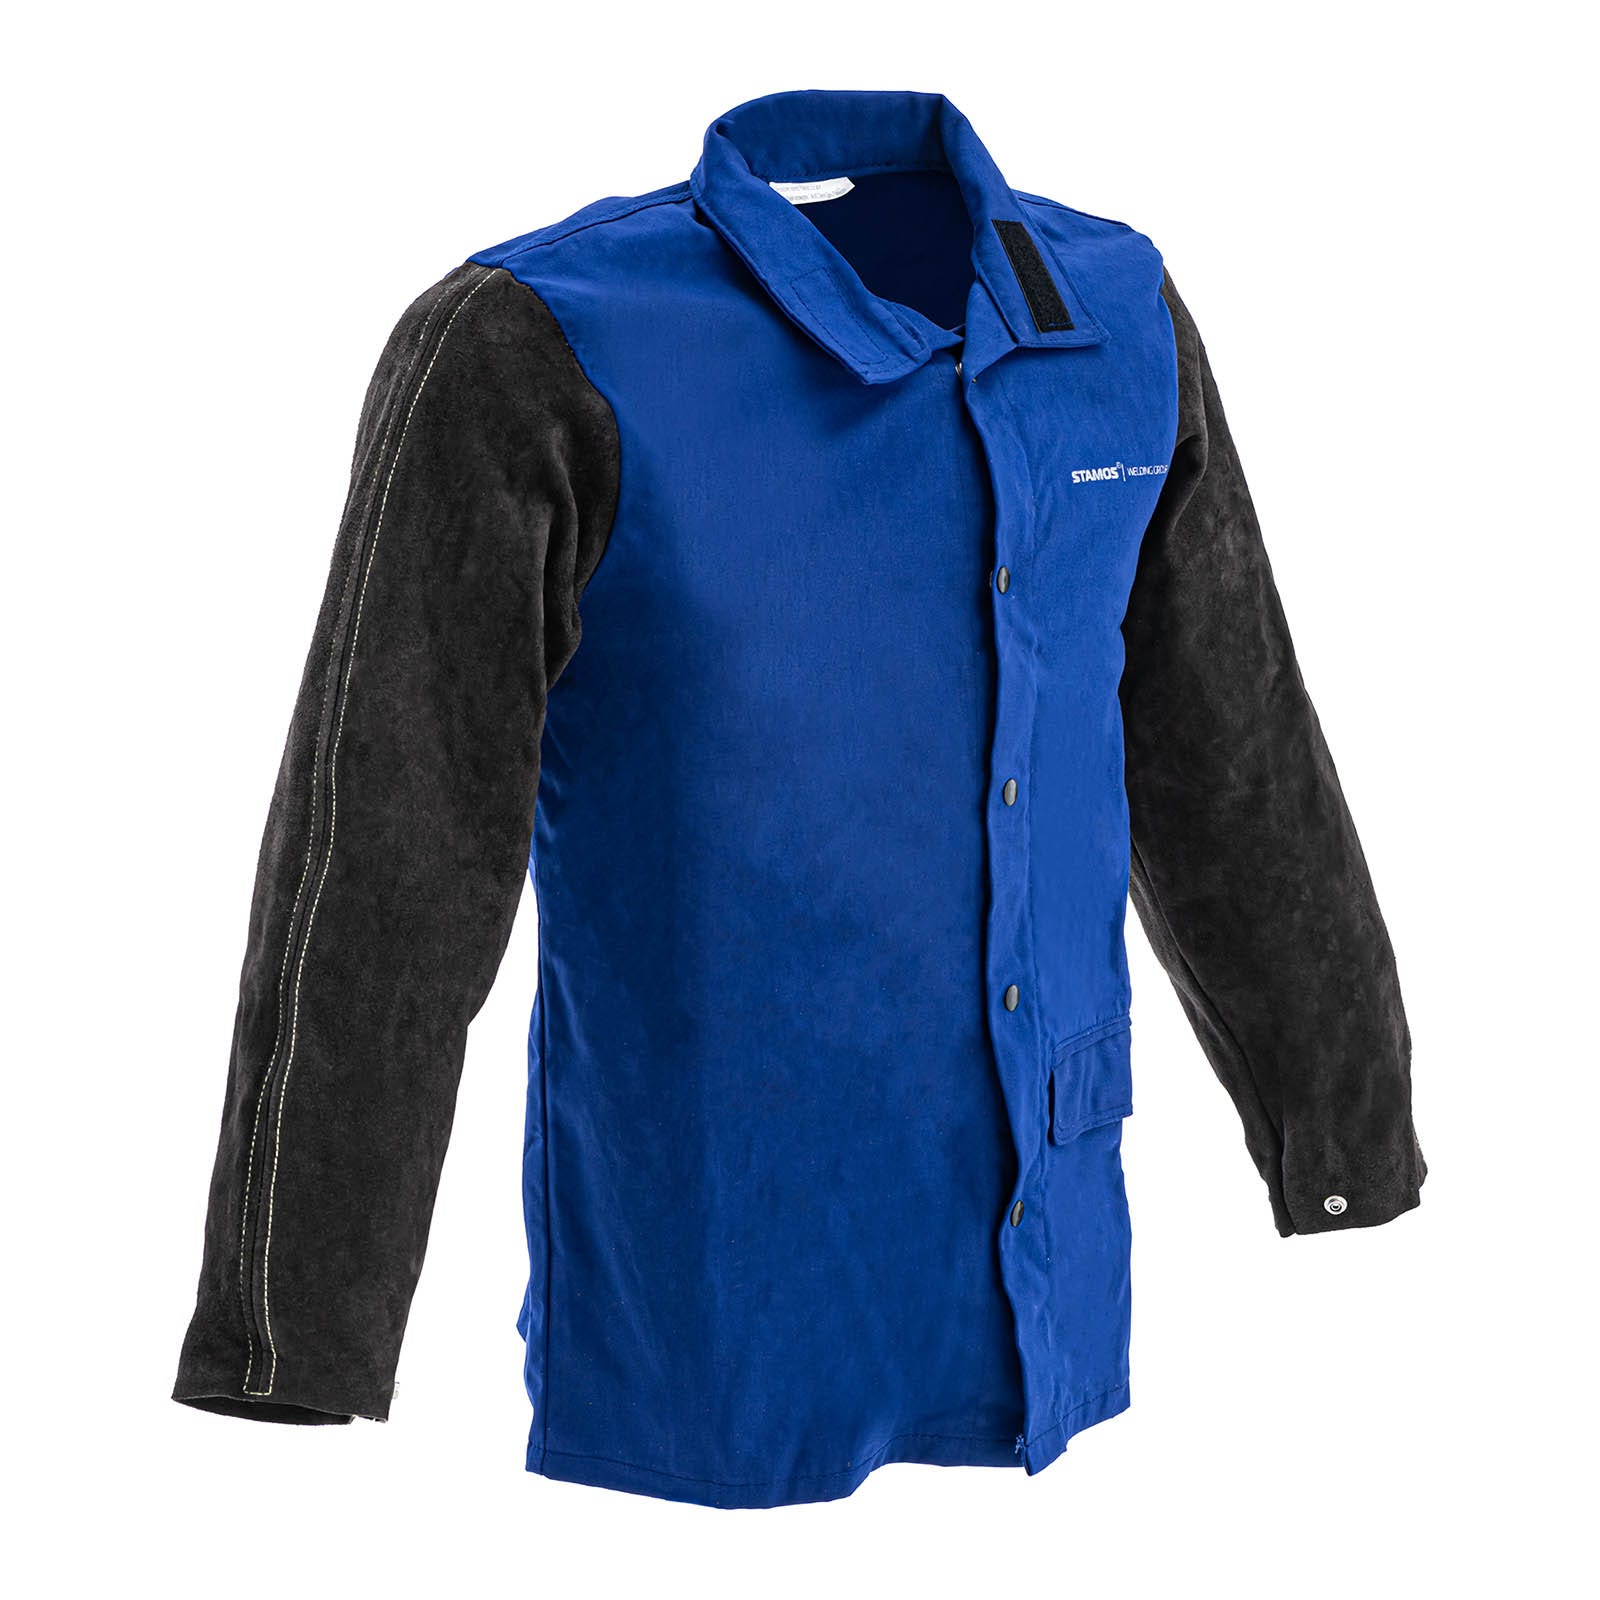 Veste de soudeur en satin de coton / croûte de cuir - taille XL - noir /  bleu Veste de soudure Veste de soudeur en cuir